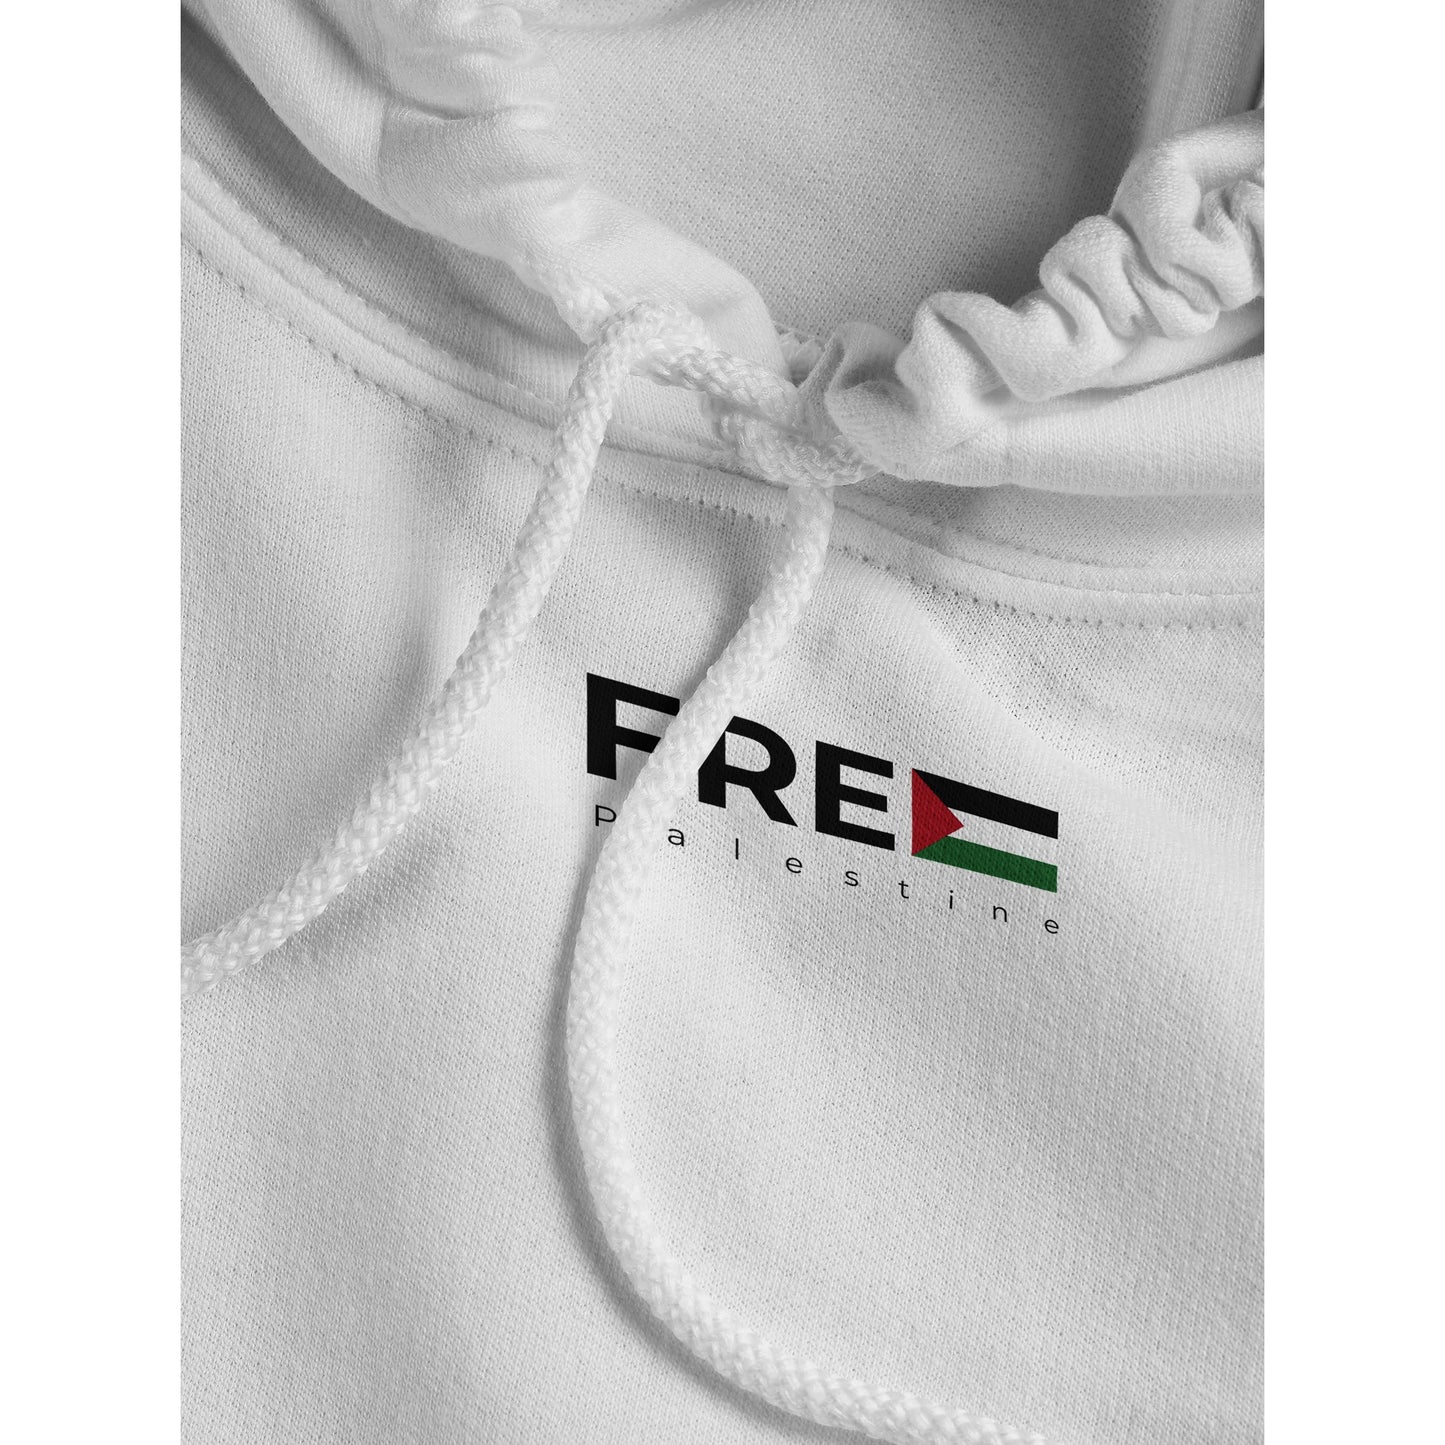 Free Palestine - Classic Unisex Pullover Hoodie